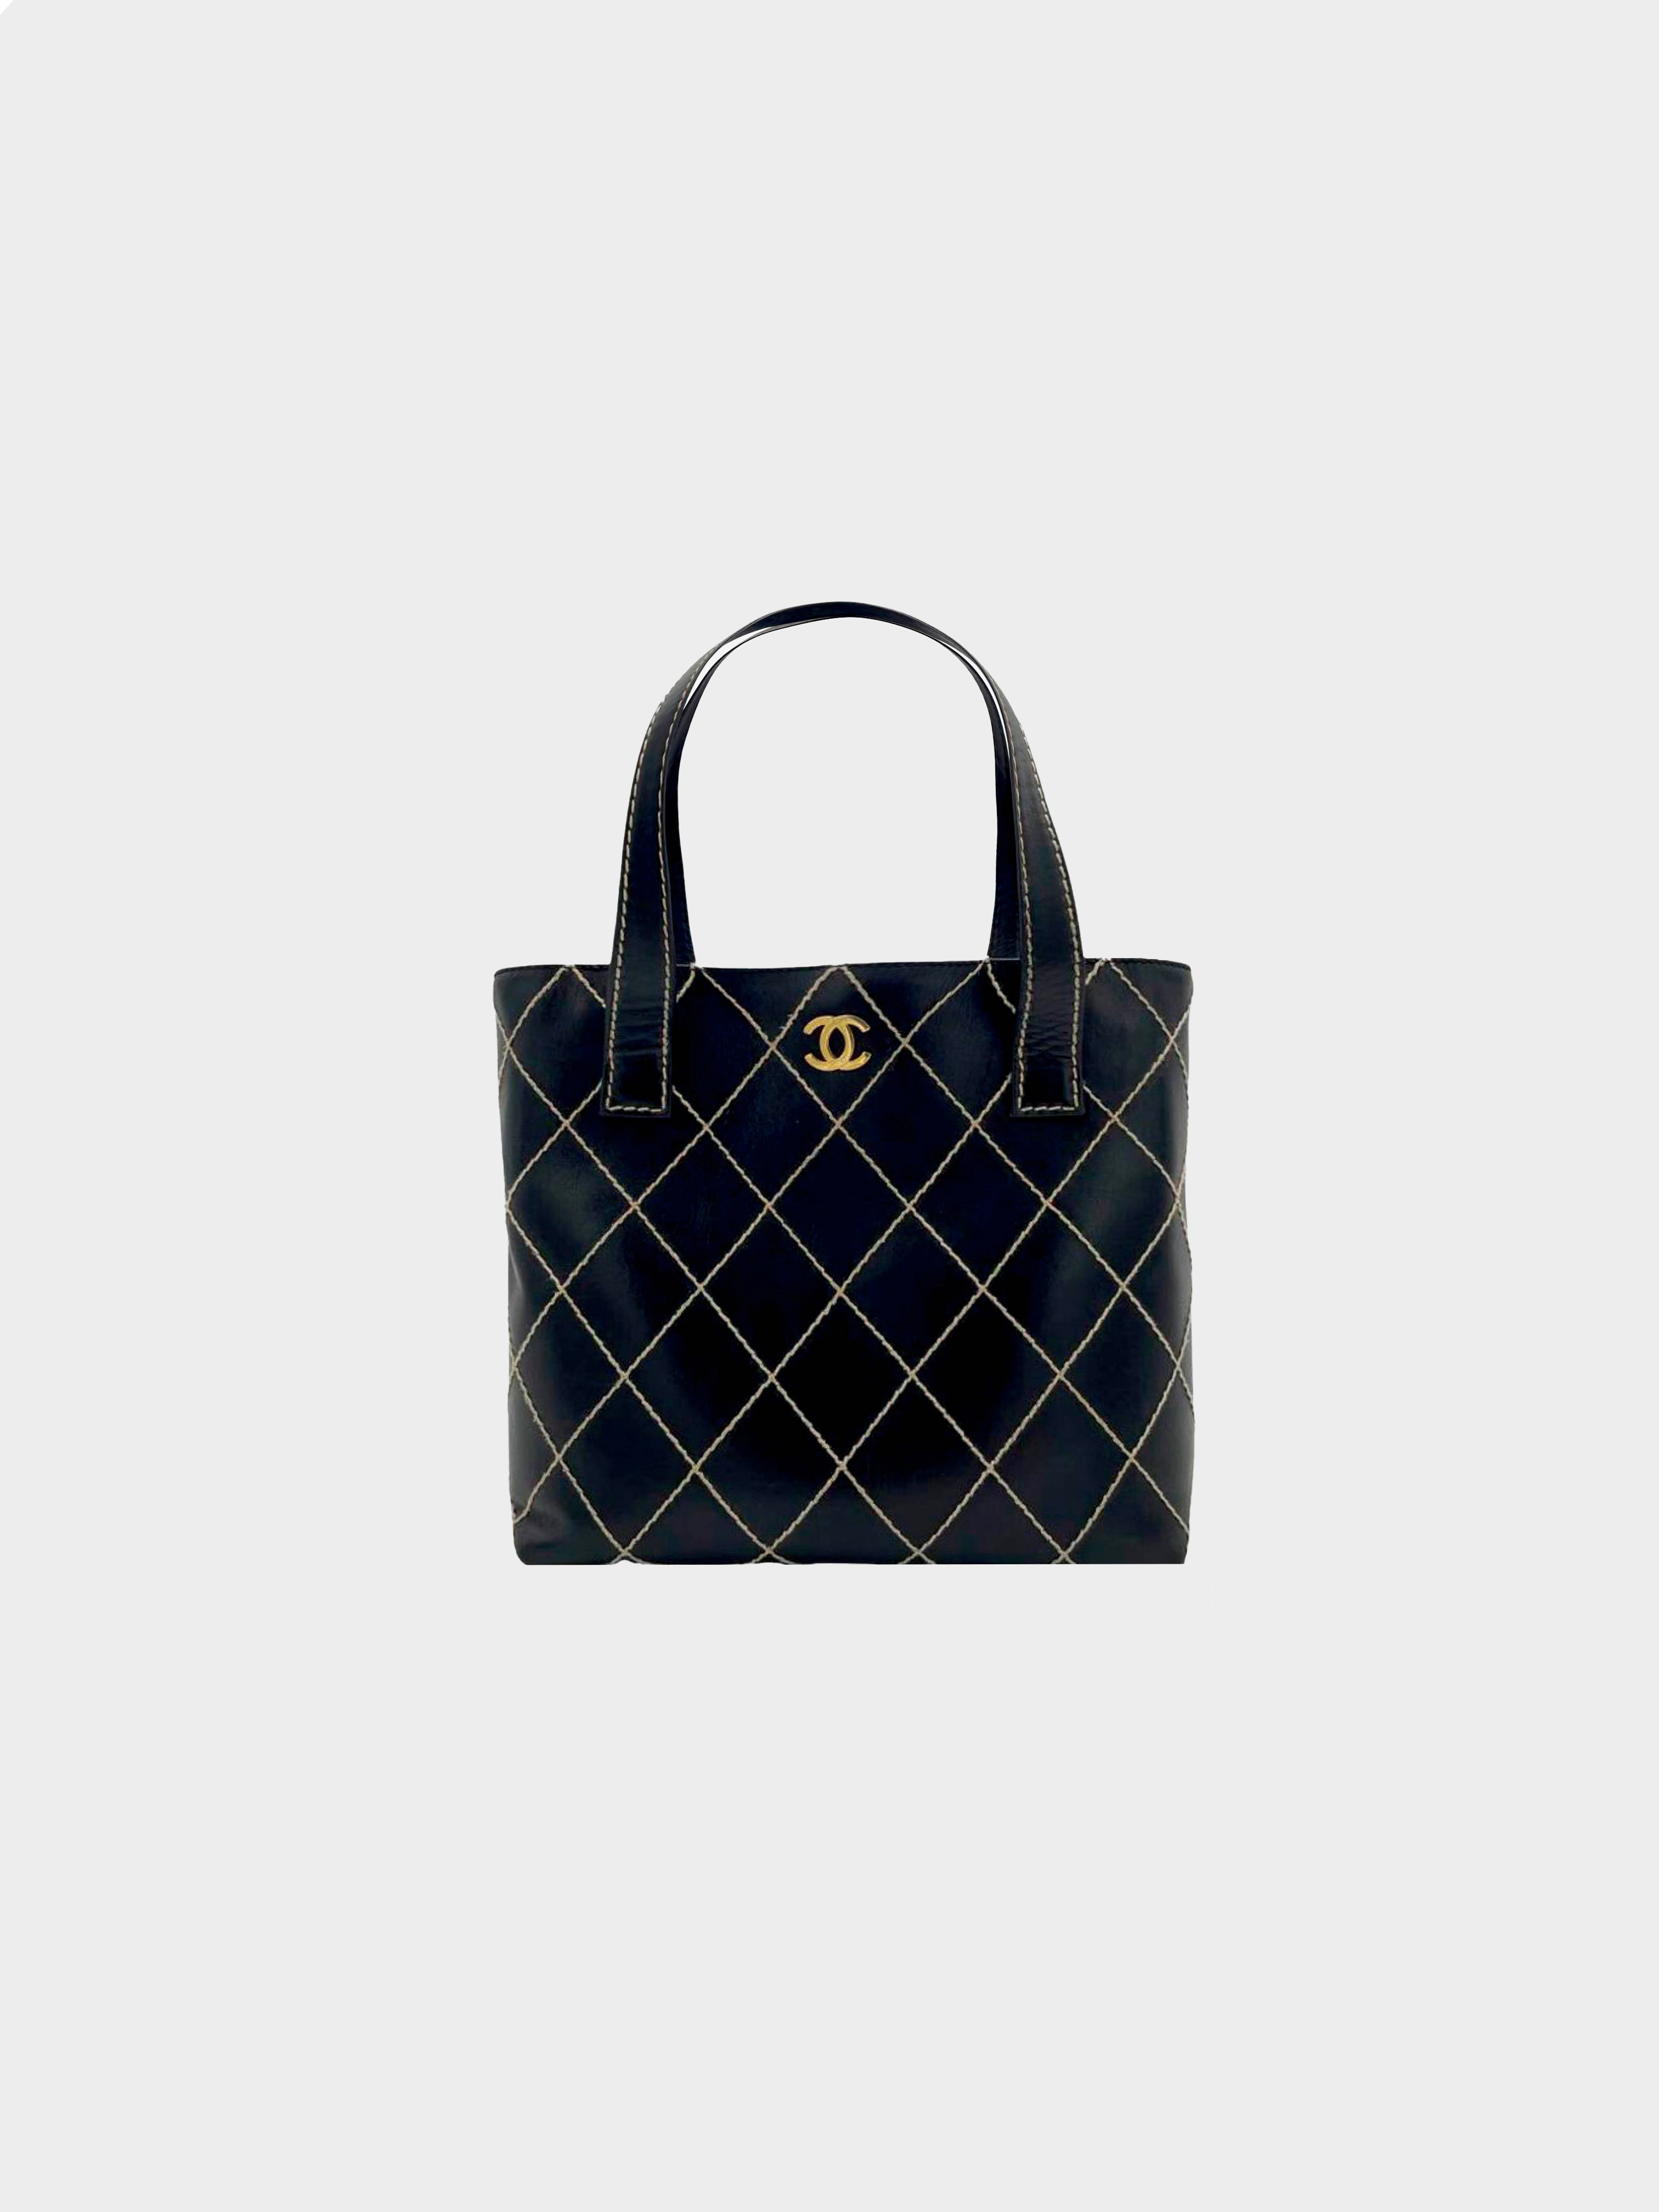 Tan Chanel CC Wild Stitch Handbag – Designer Revival